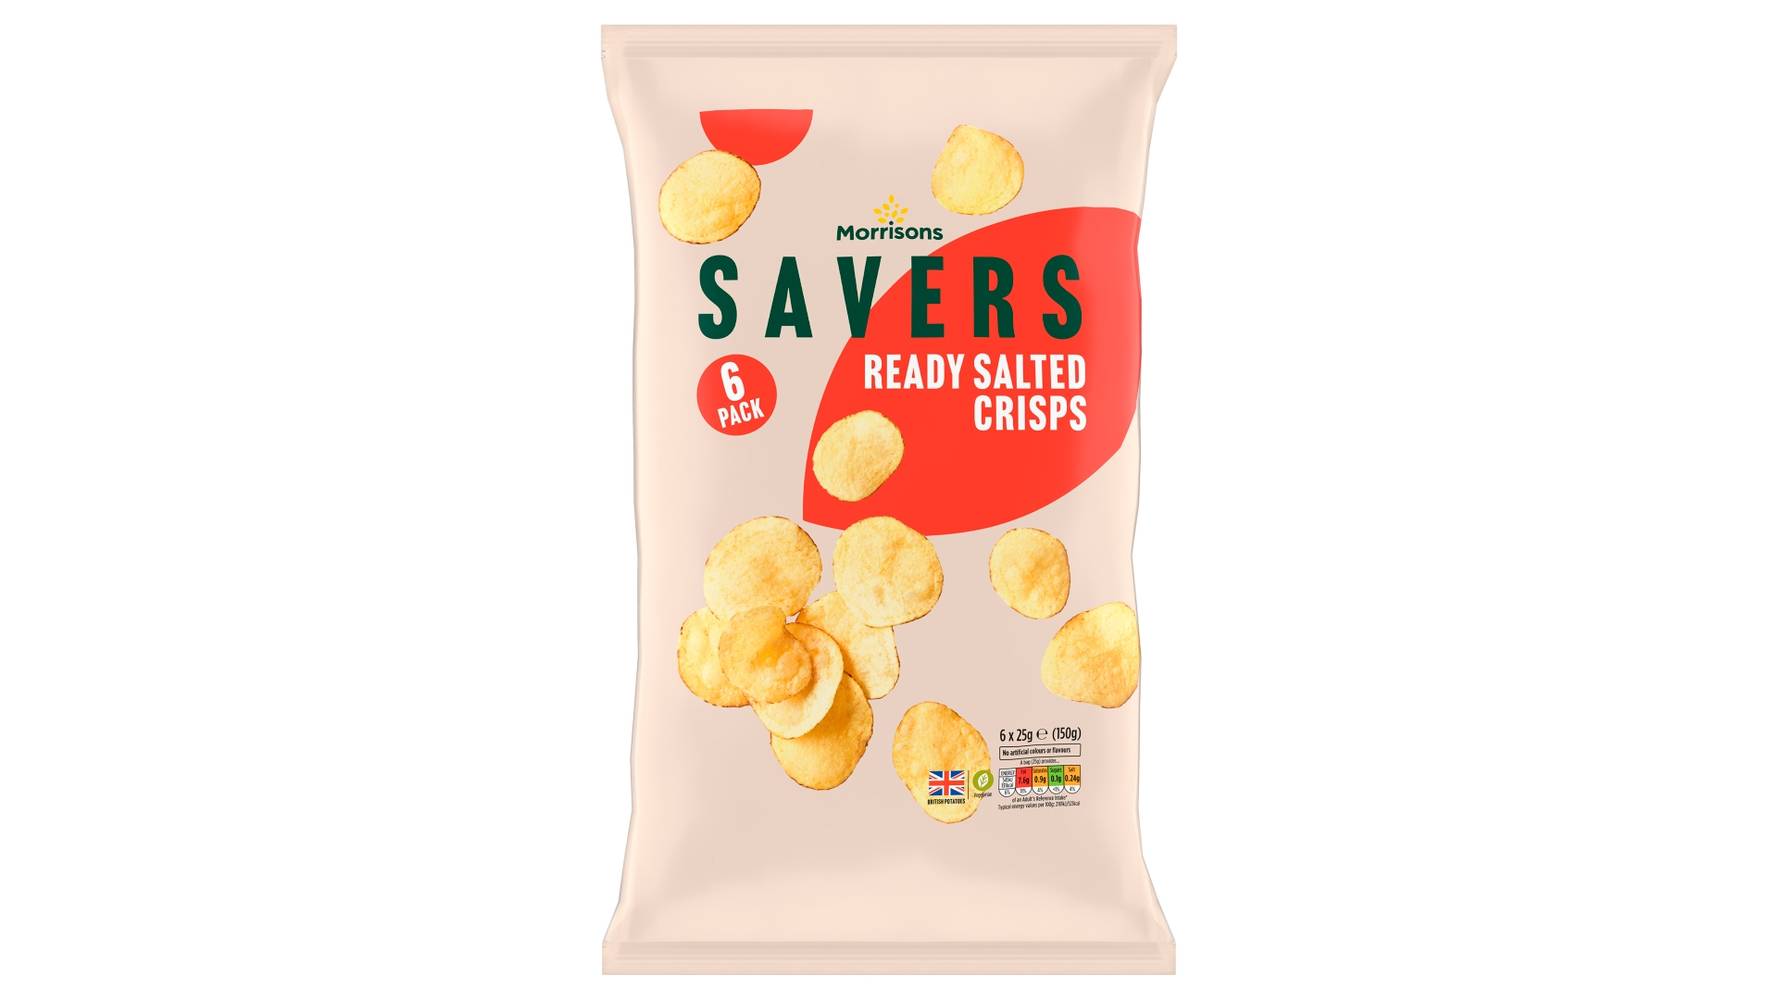 Morrisons Savers Crisps (ready salted)